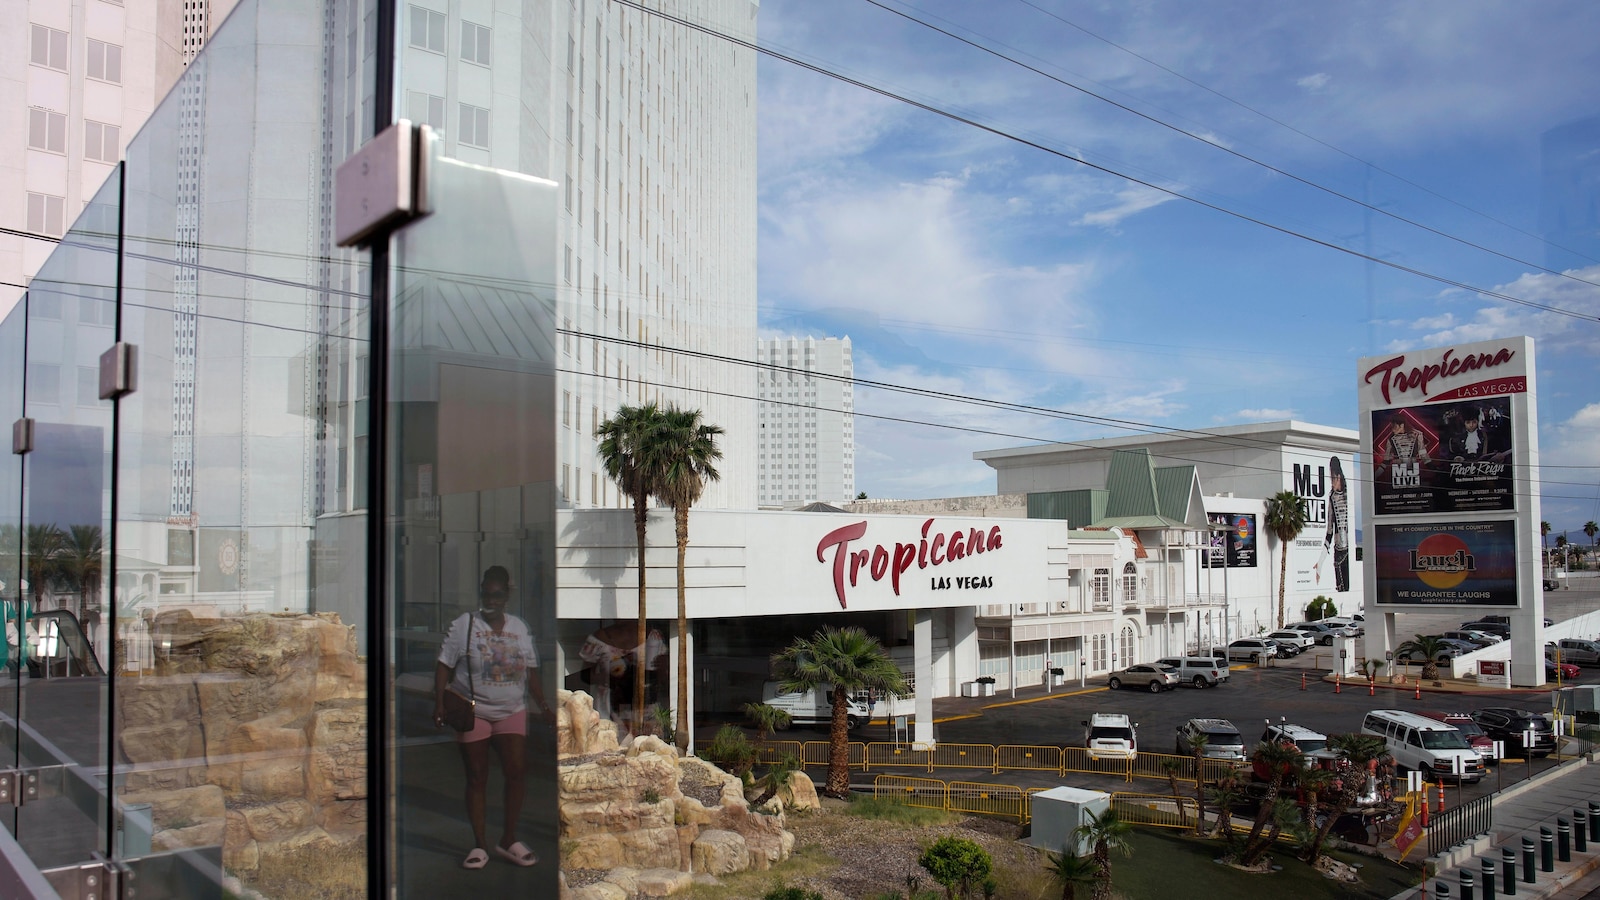 Tropicana Las Vegas, a Sin City landmark since 1957, set to be demolished for MLB baseball.